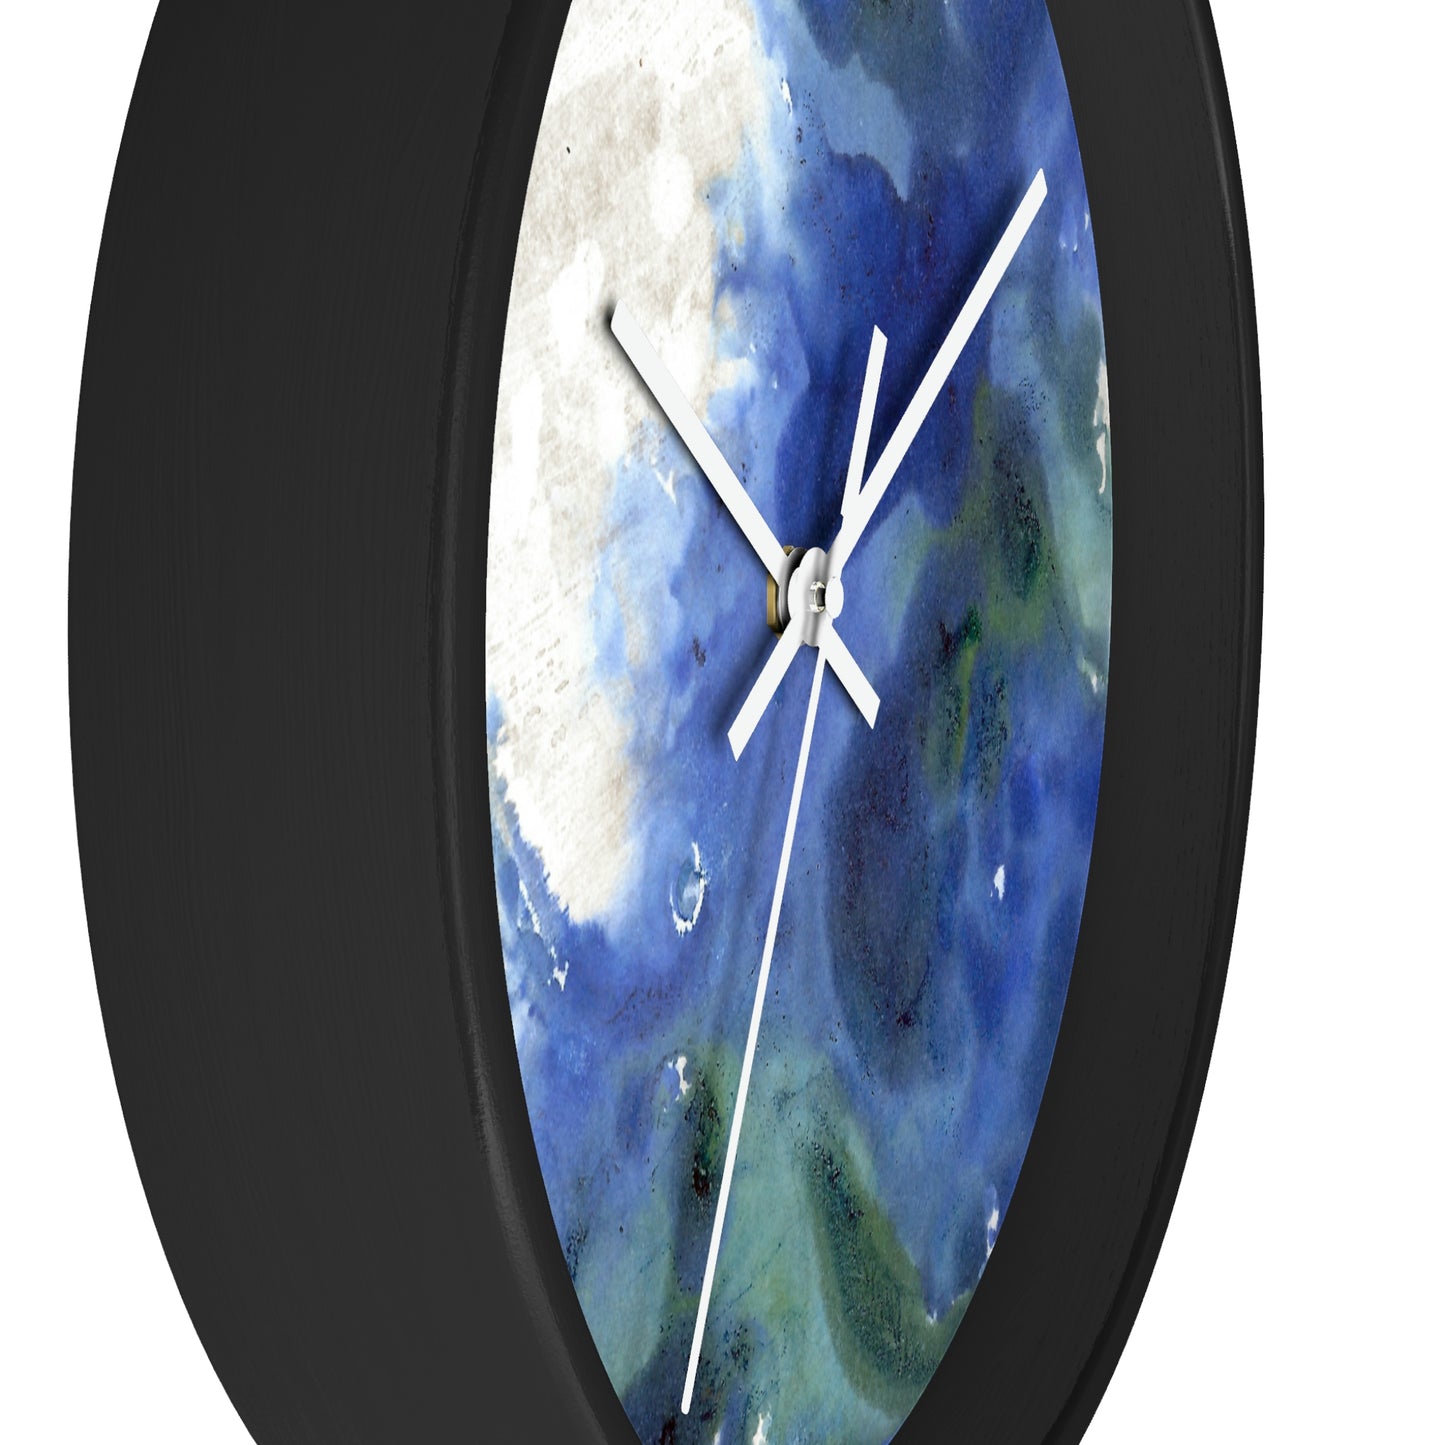 Mother Earth Wall Clock - Alja Design